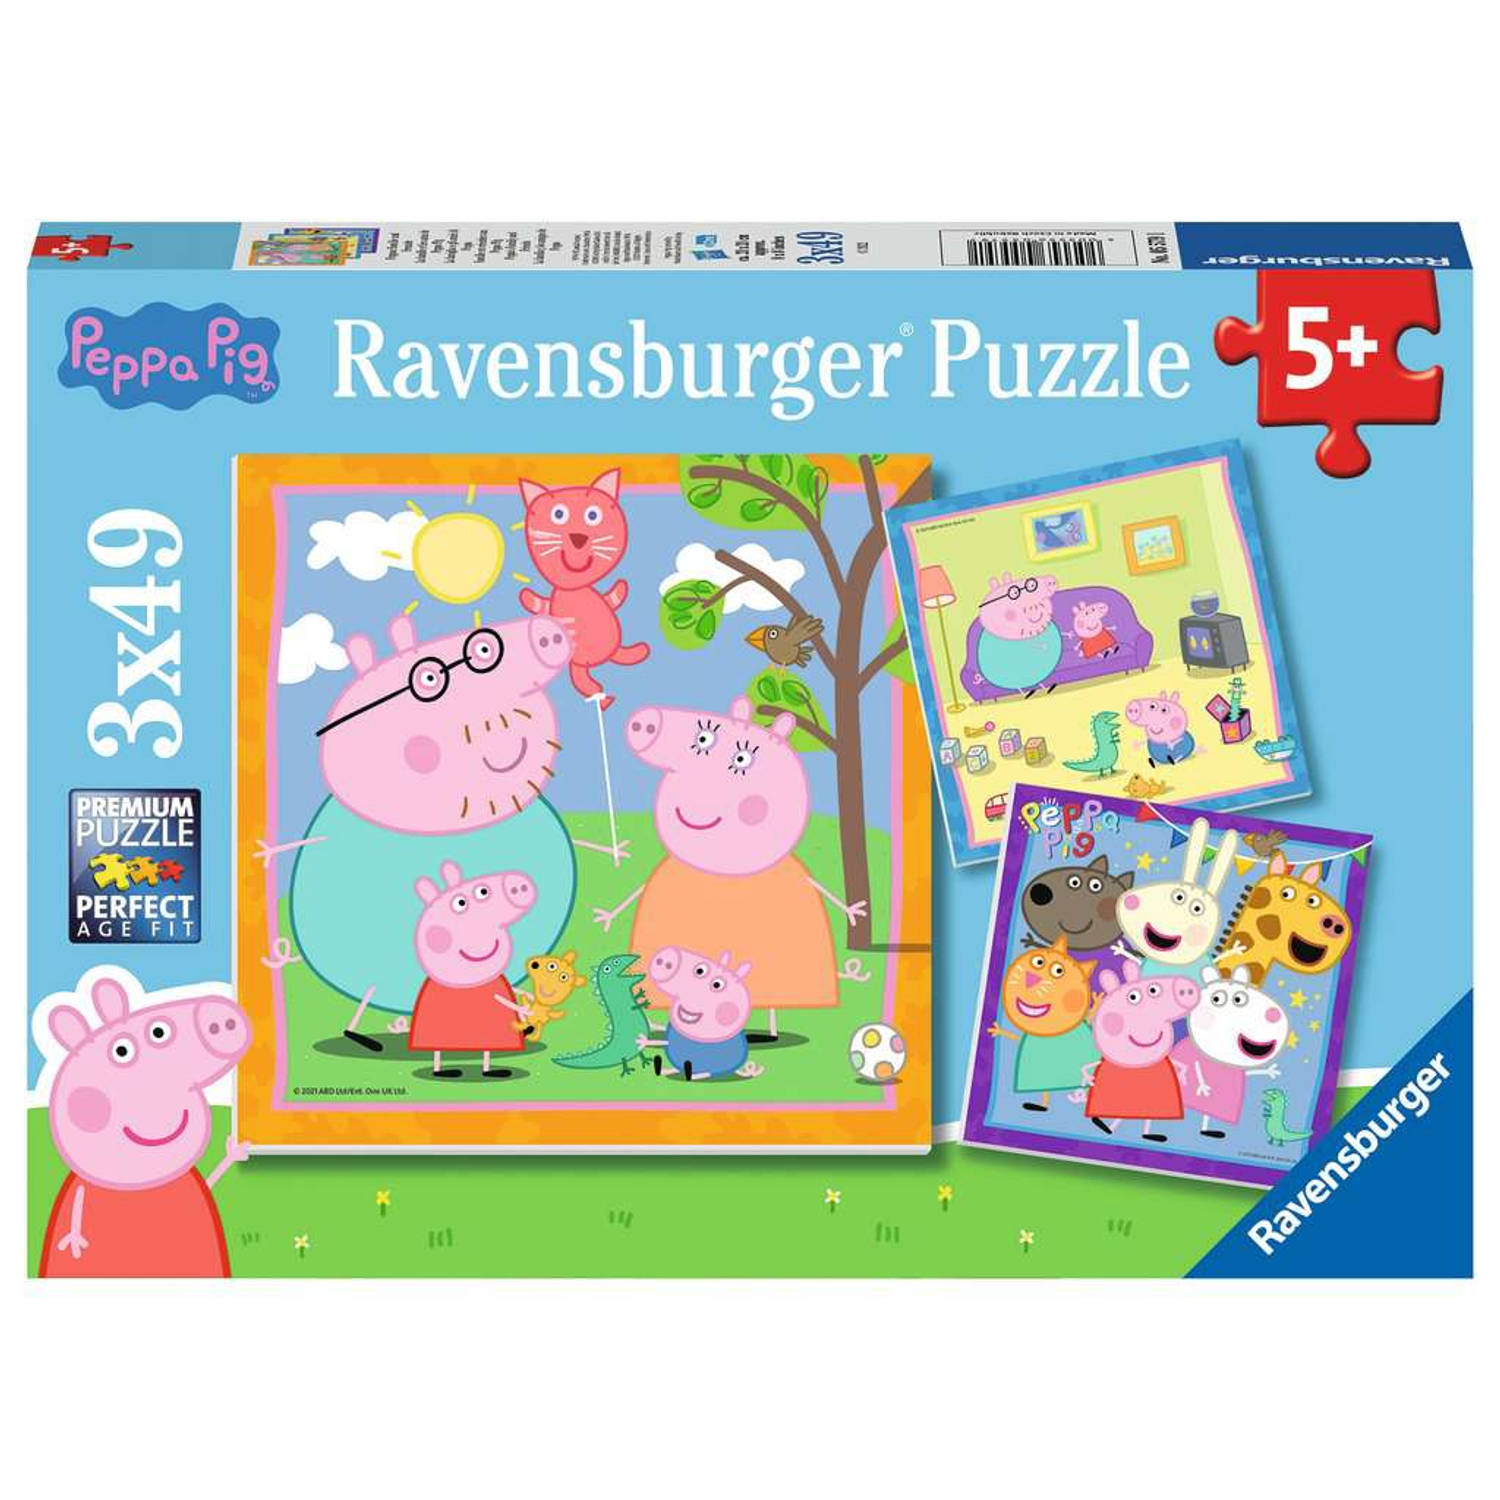 Ravensburger puzzel Familie en vrienden van Peppa Pig 3 x 49 stukjes